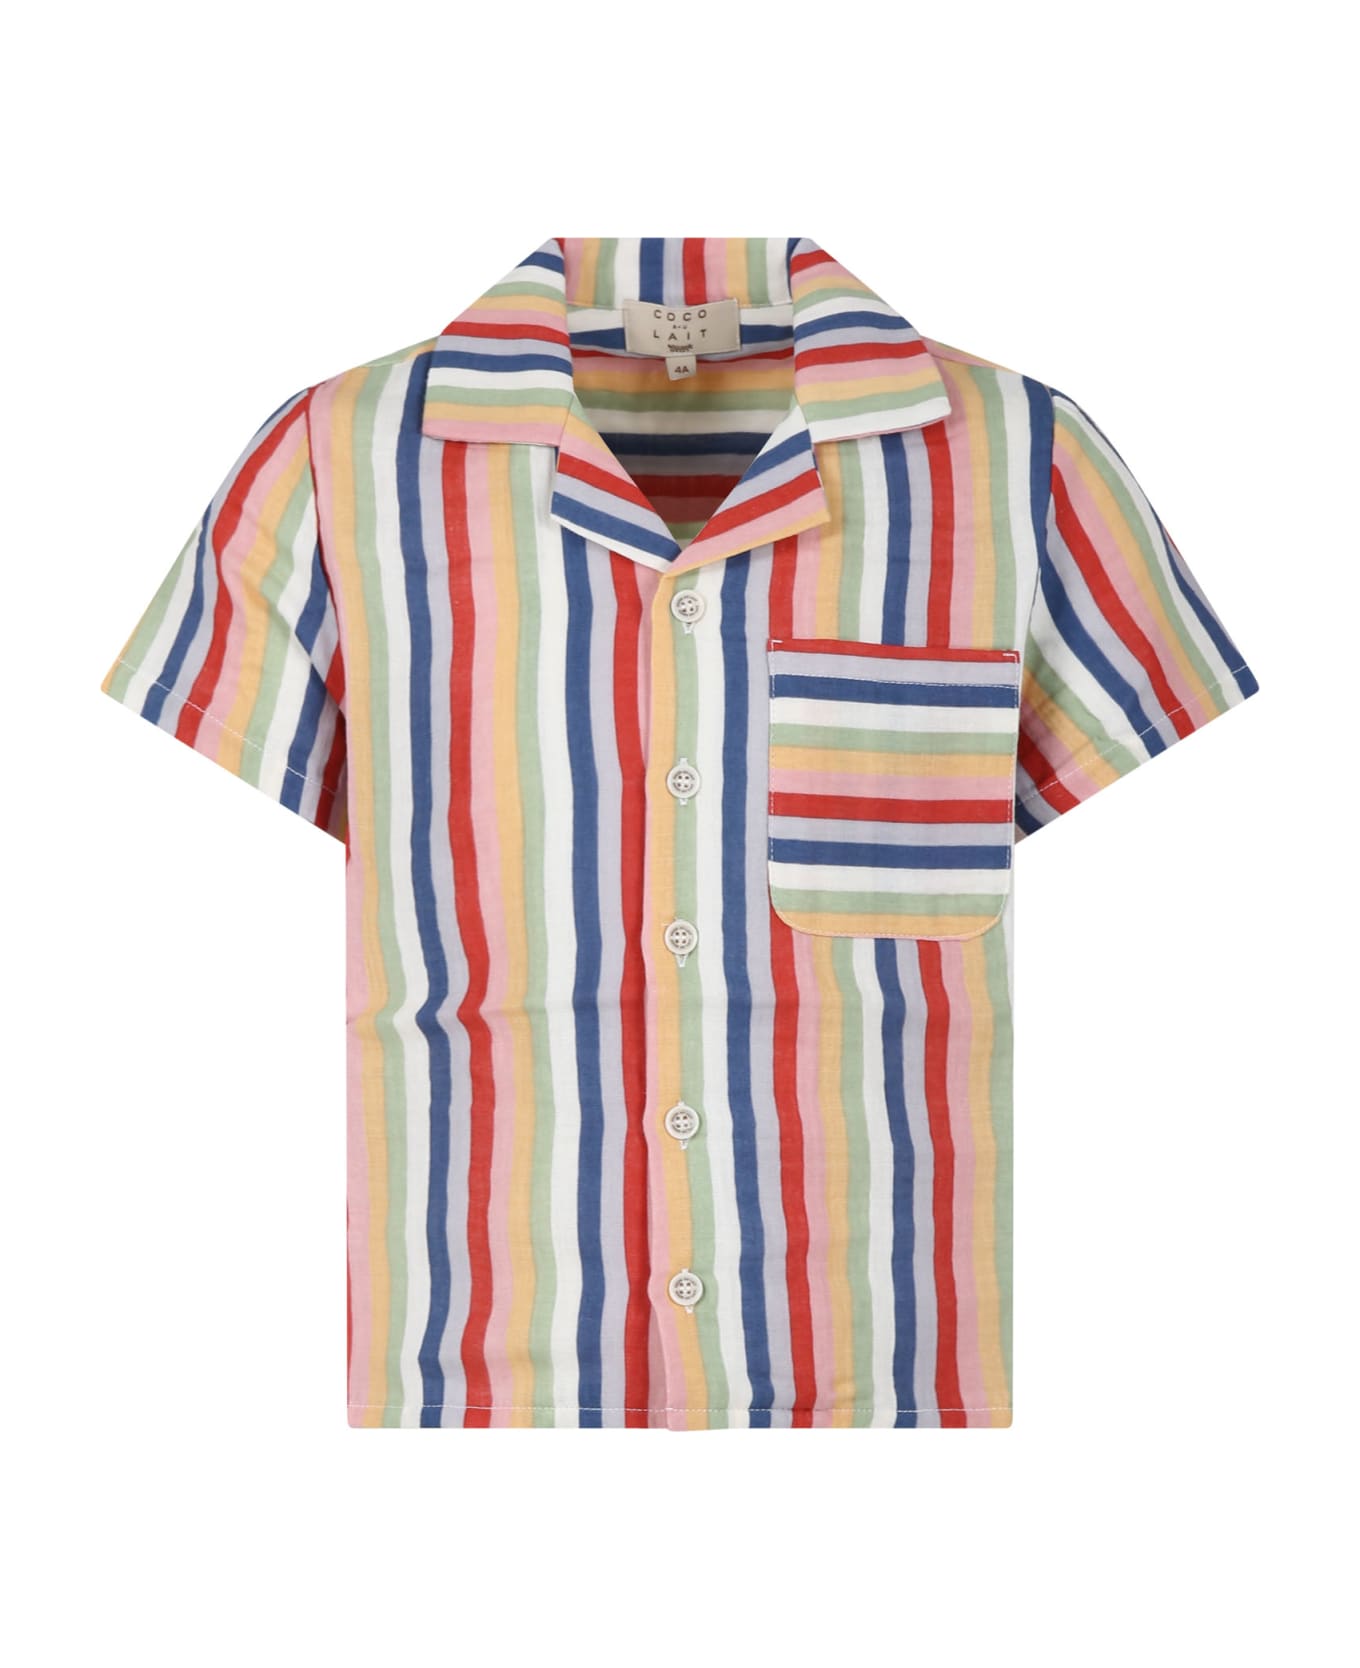 Coco Au Lait Multicolor Shirt For Kids With Stripes Pattern - Multicolor シャツ